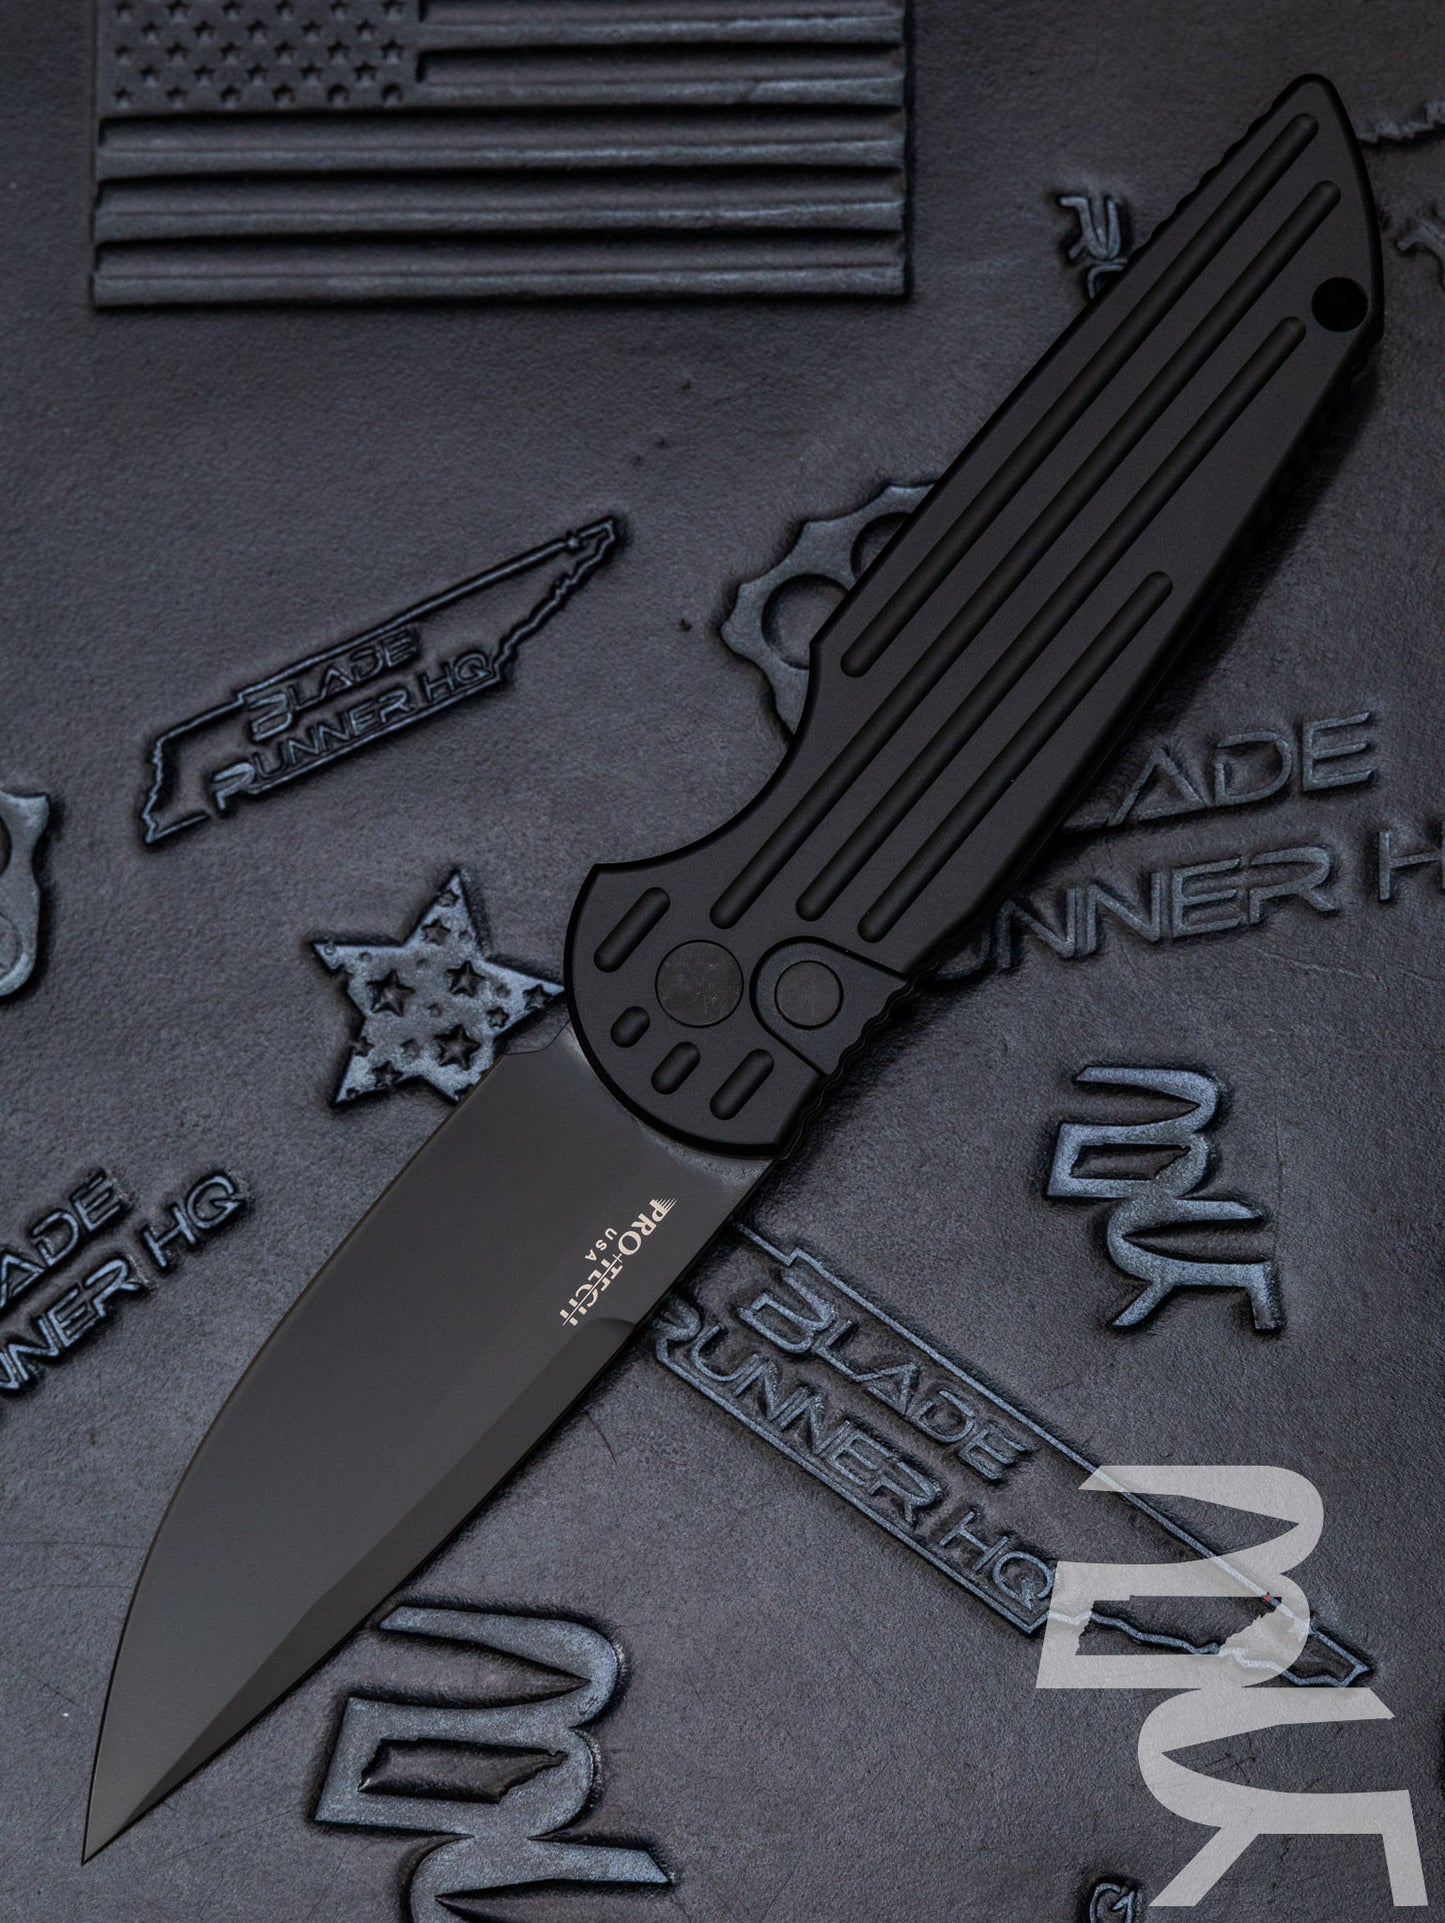 PROTECH TR-3 TACTICAL RESPONSE BLACK ALUMINUM SWAT LEFT HAND AUTOMATIC KNIFE 3.5" BLACK